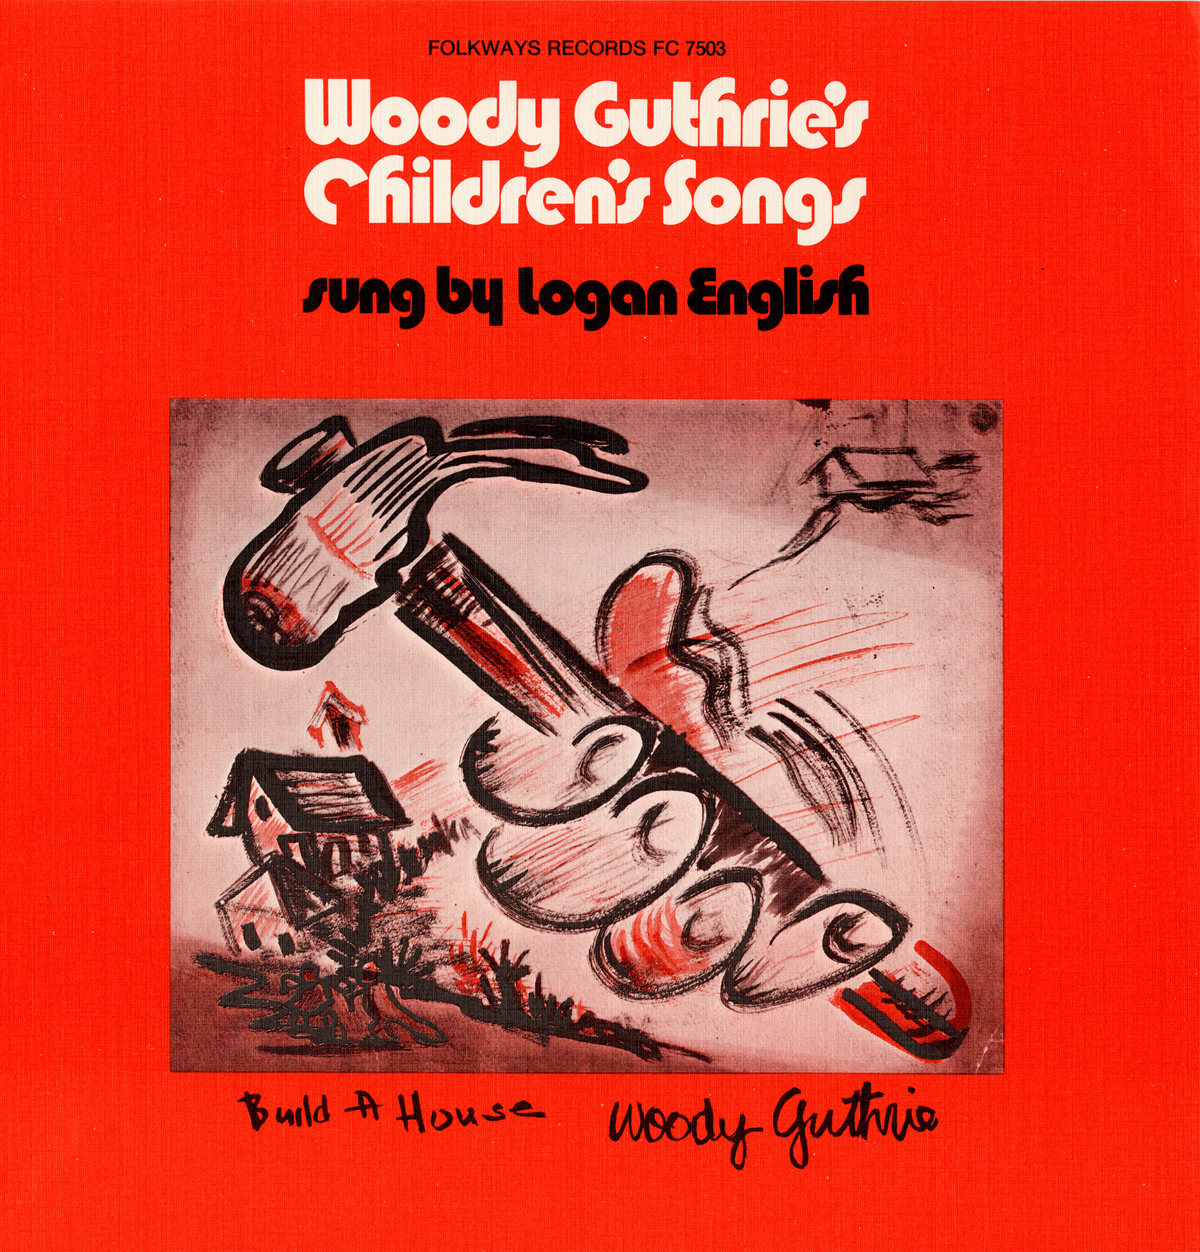 WOODY GUTHRIE'S CHILDREN'S SONGS